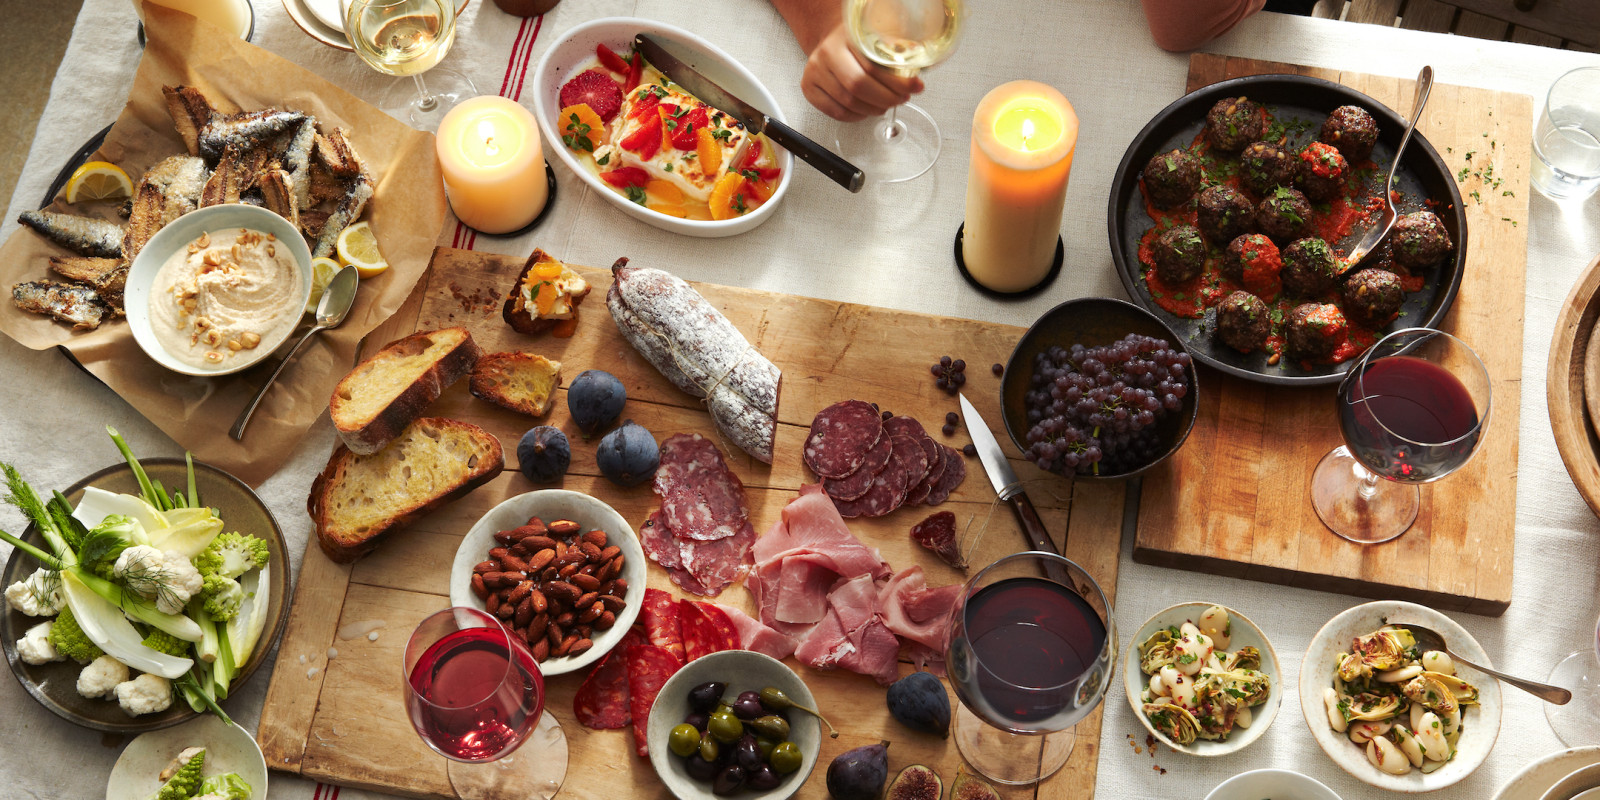 Italian Dinner Ideas For Party
 How to Host an Instagram Worthy Italian Dinner Party